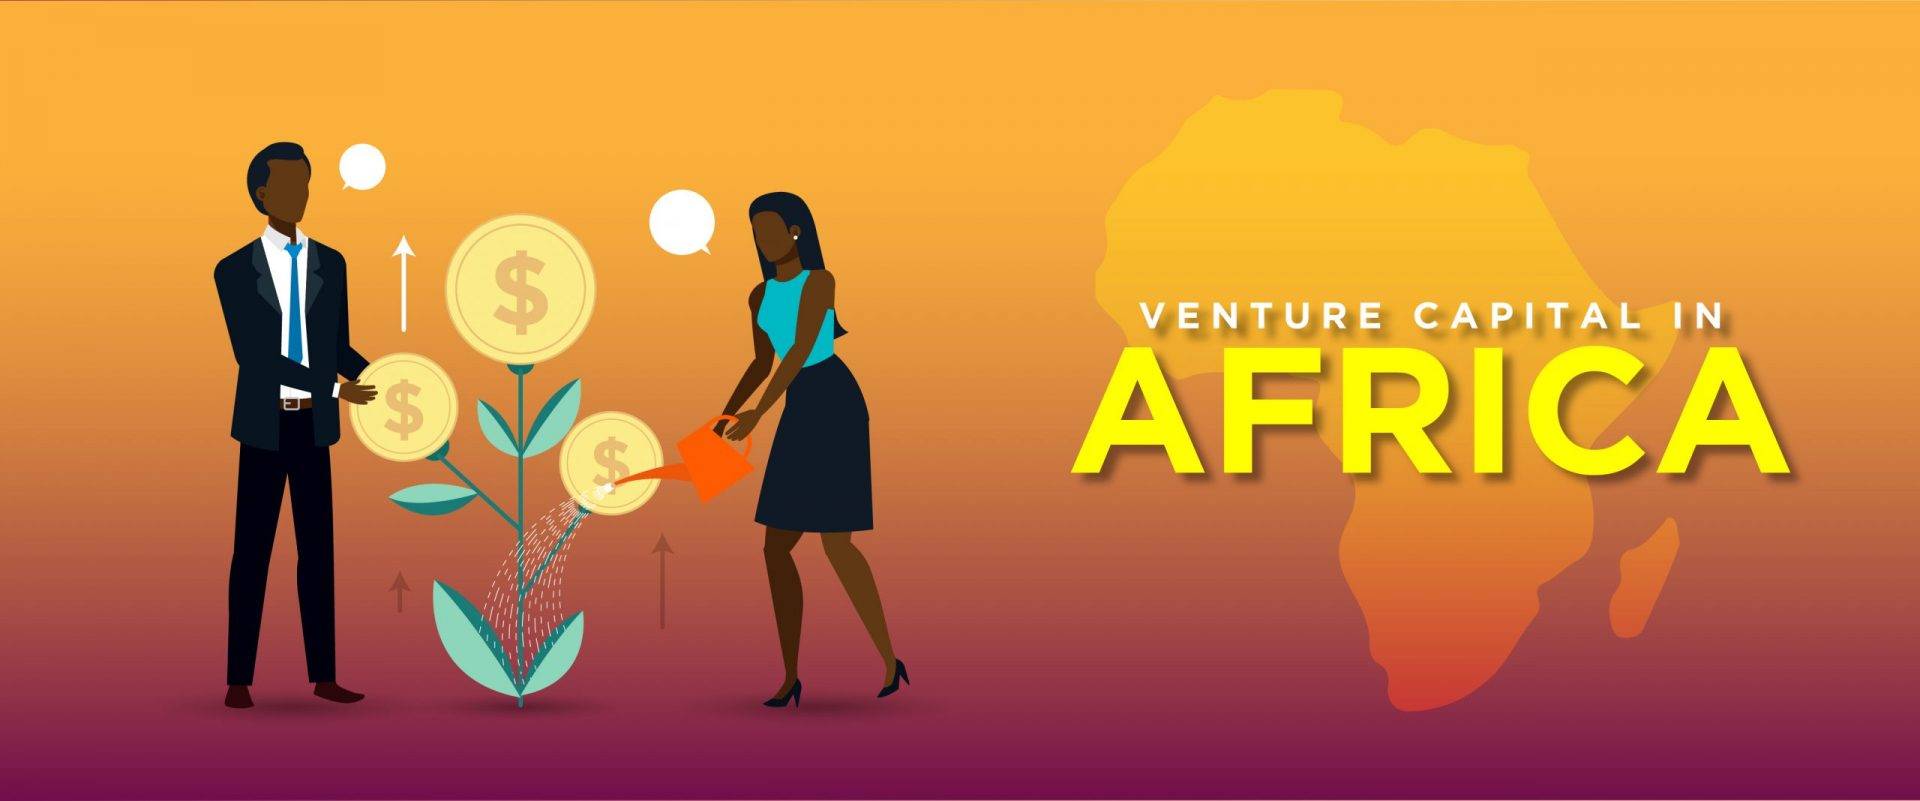 https://weetracker.com/wp-content/uploads/2020/05/Venture-Capital-in-Africa-V2-scaled.jpg